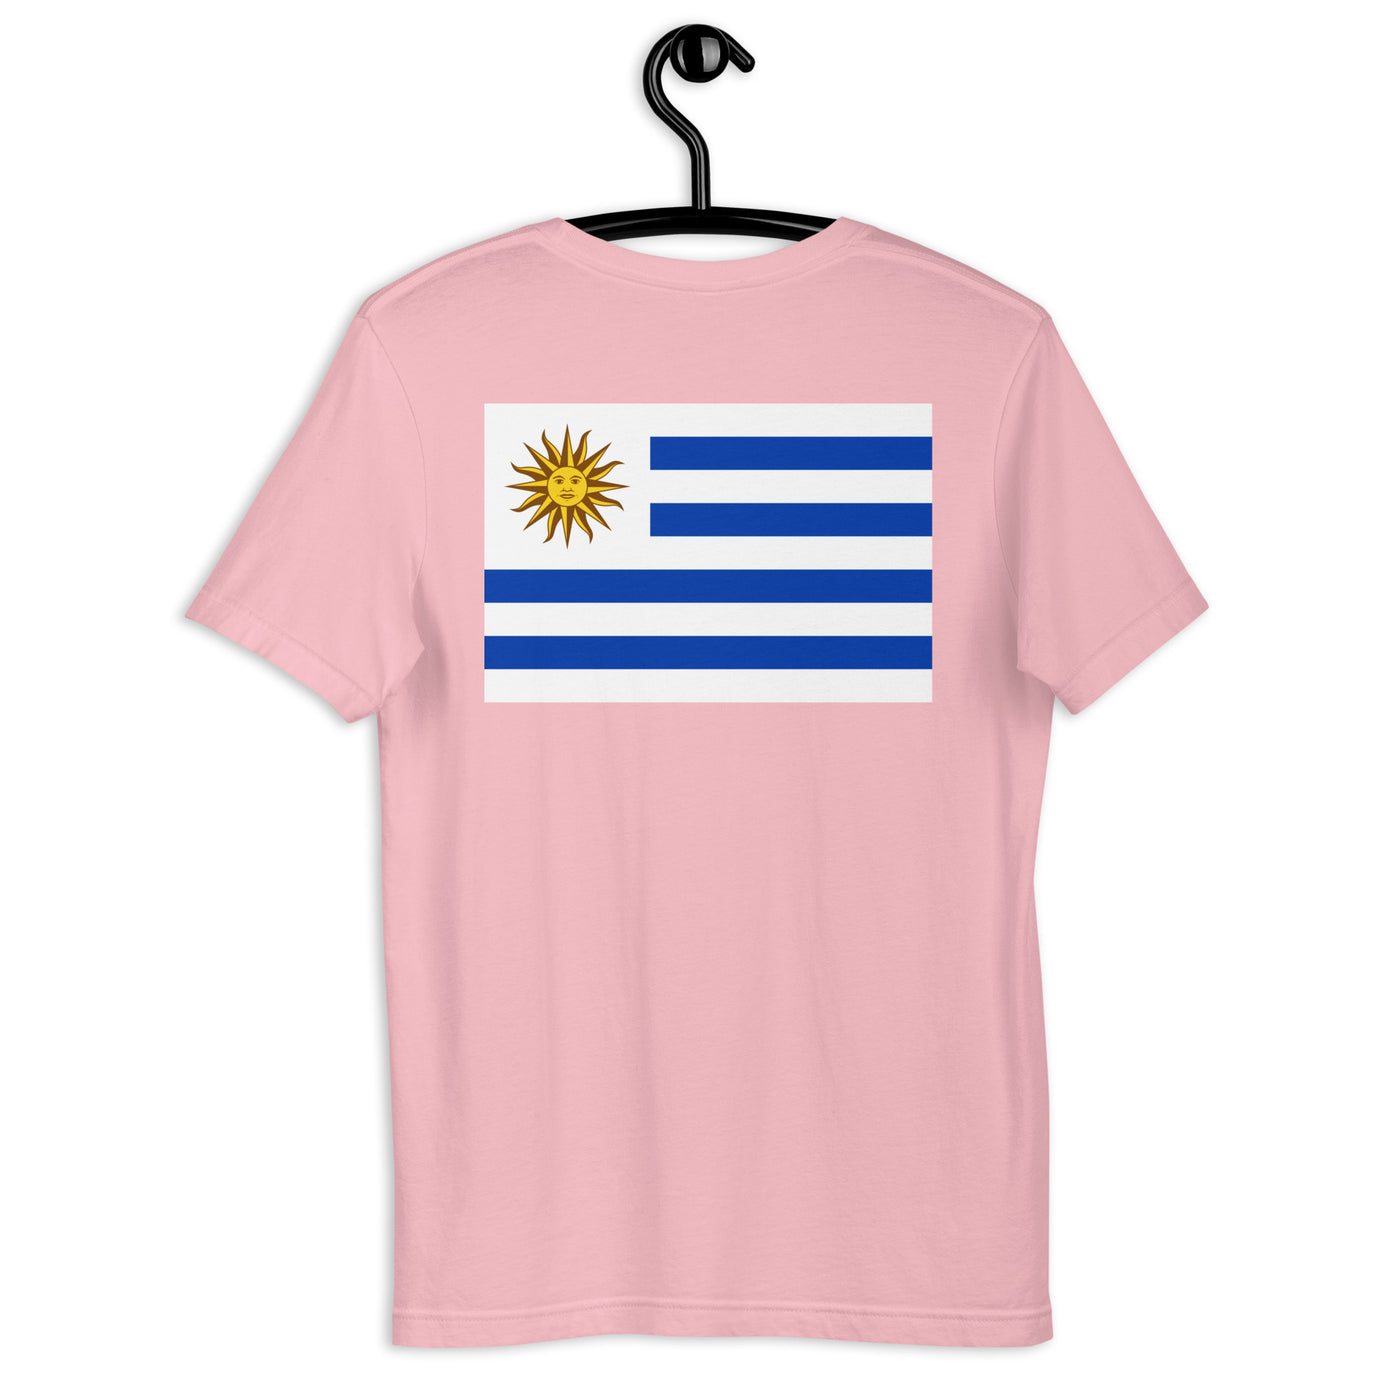 Uruguay POR VIDA (White Text) Unisex t-shirt